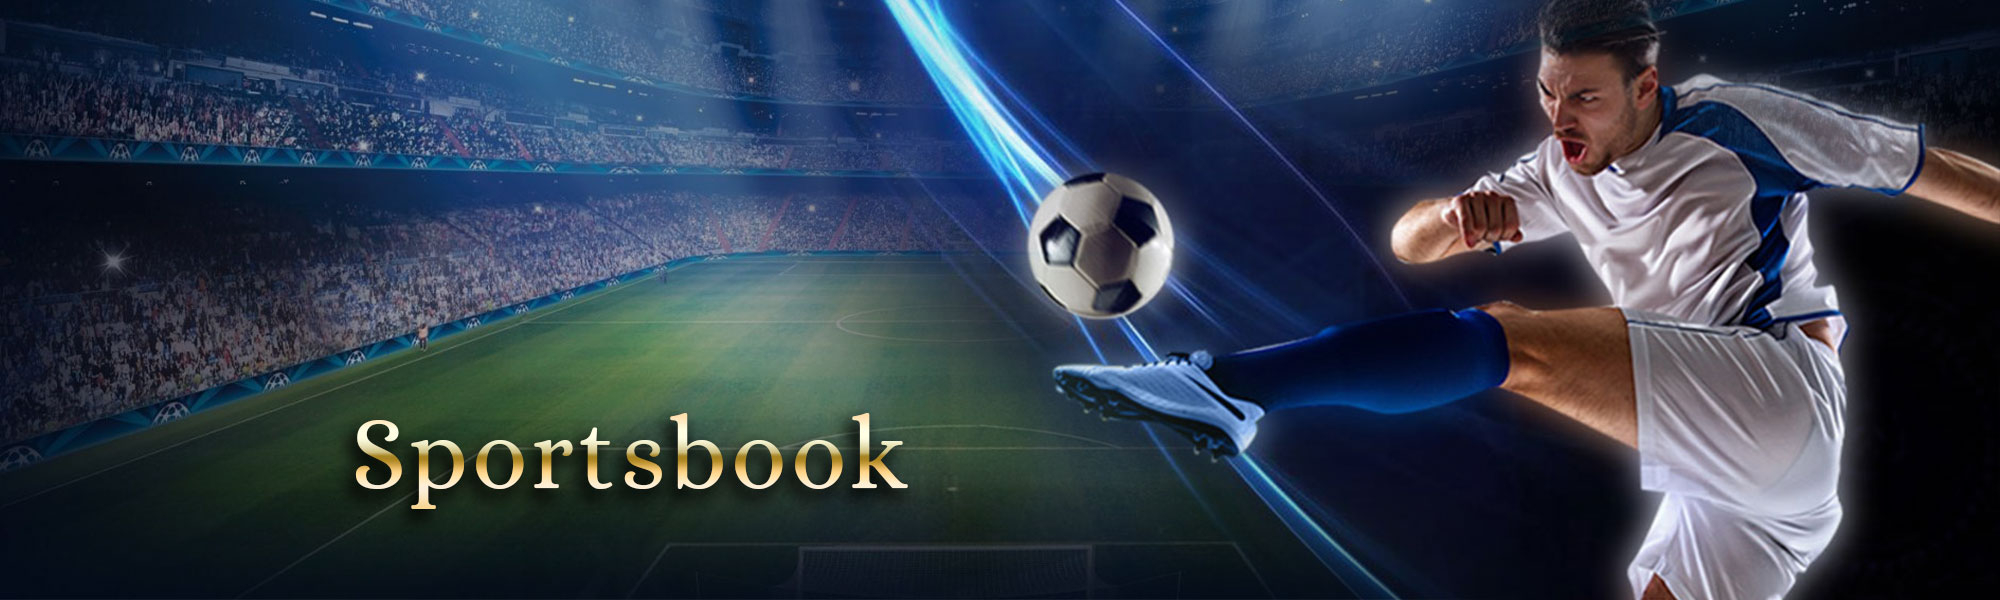 Sportbook Banner